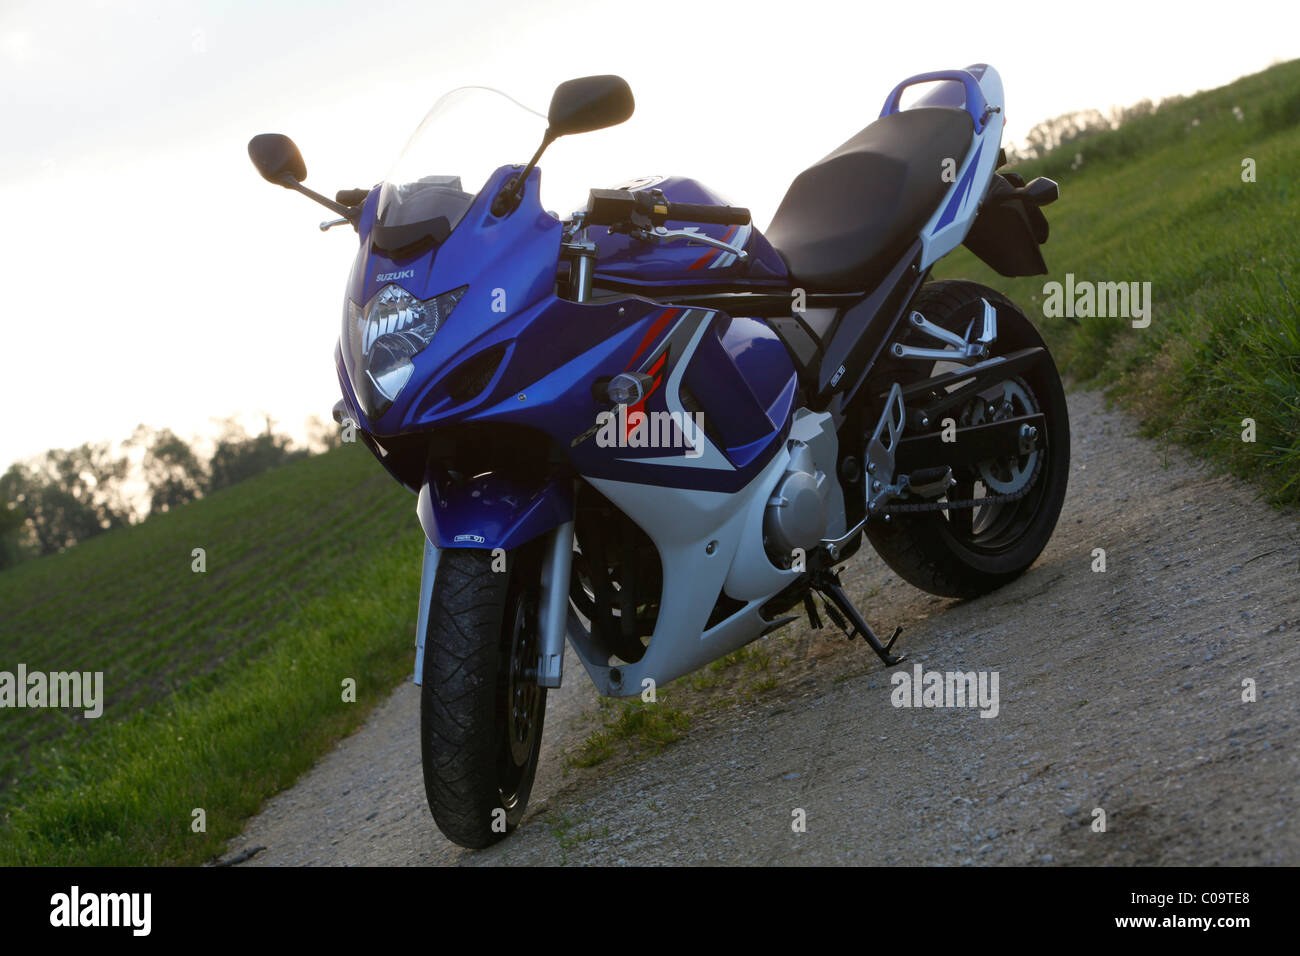 Suzuki GSX-R 650 motorbike Stock Photo - Alamy